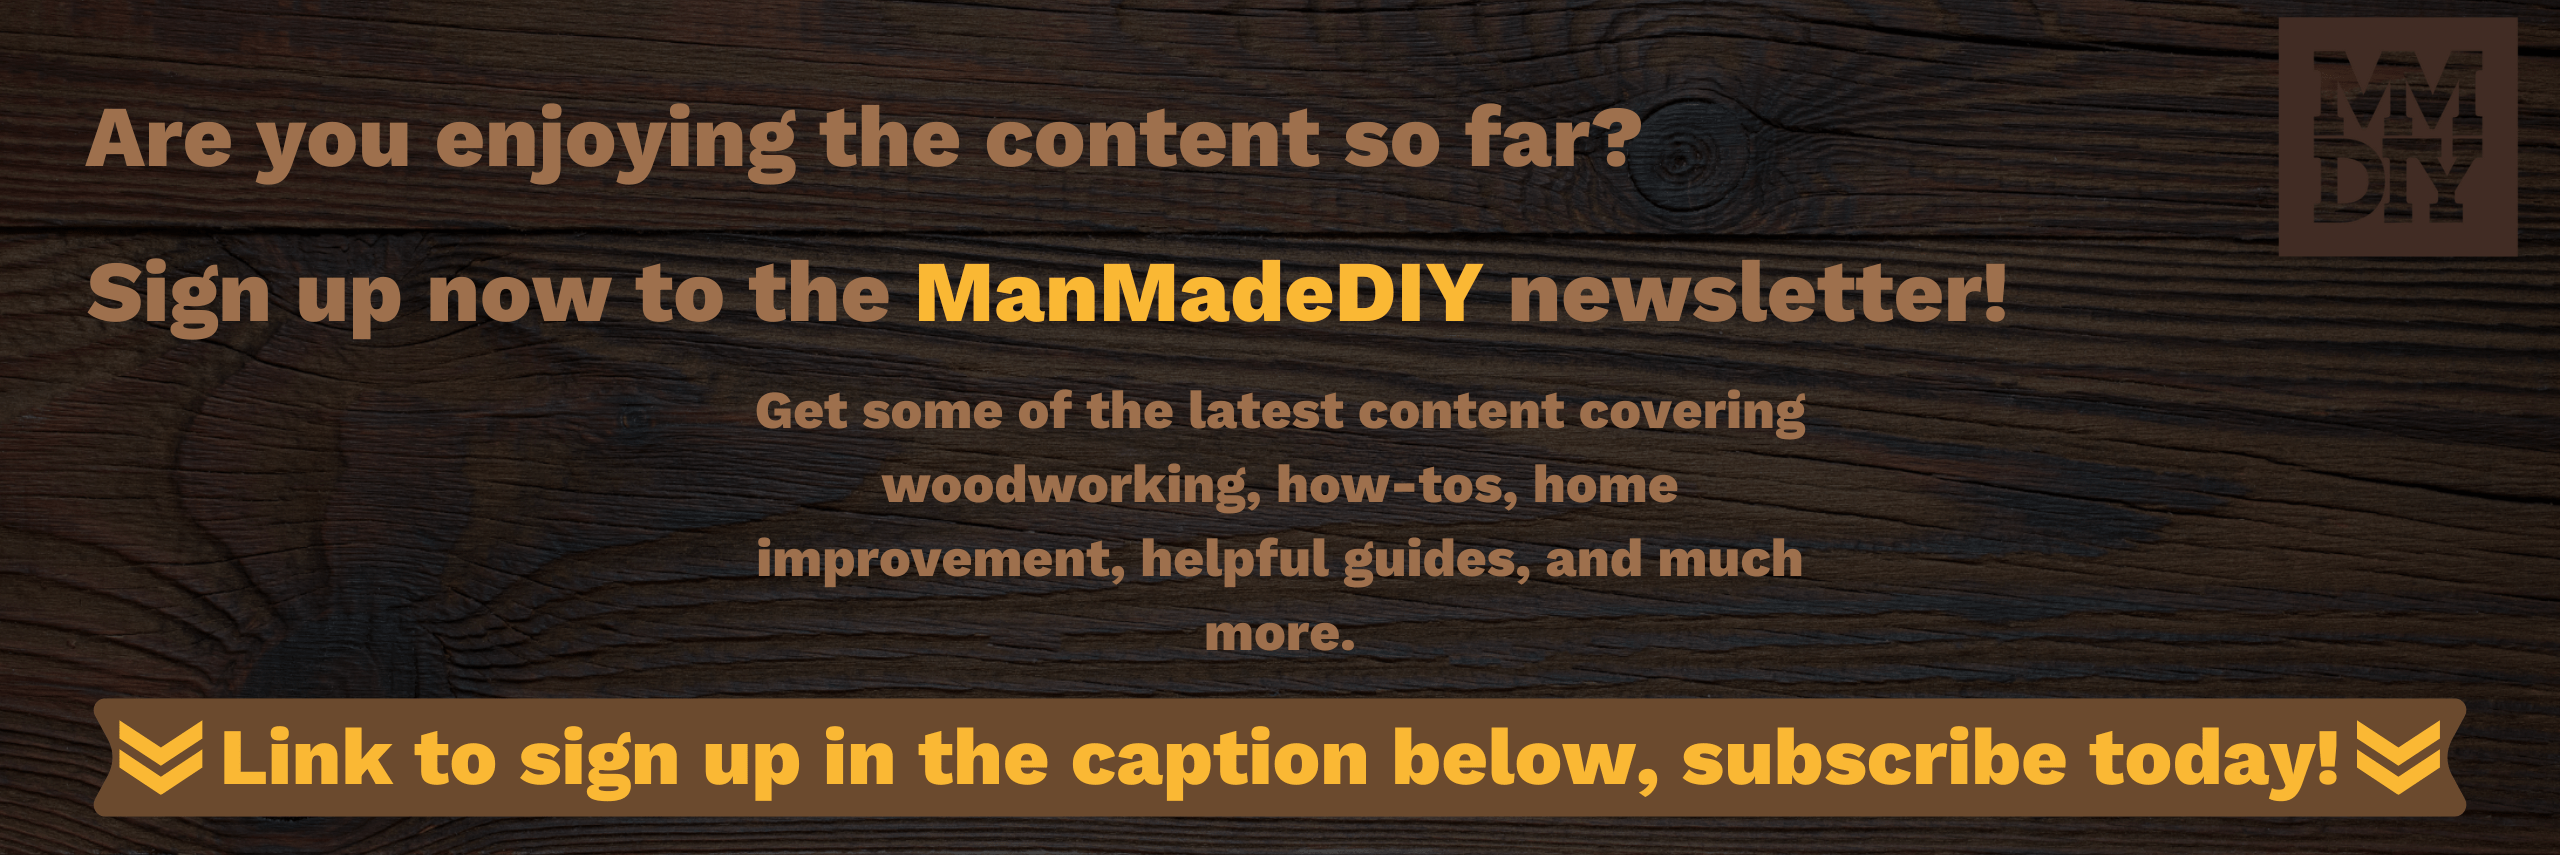 ManMadeDIY newsletter subscription creative.